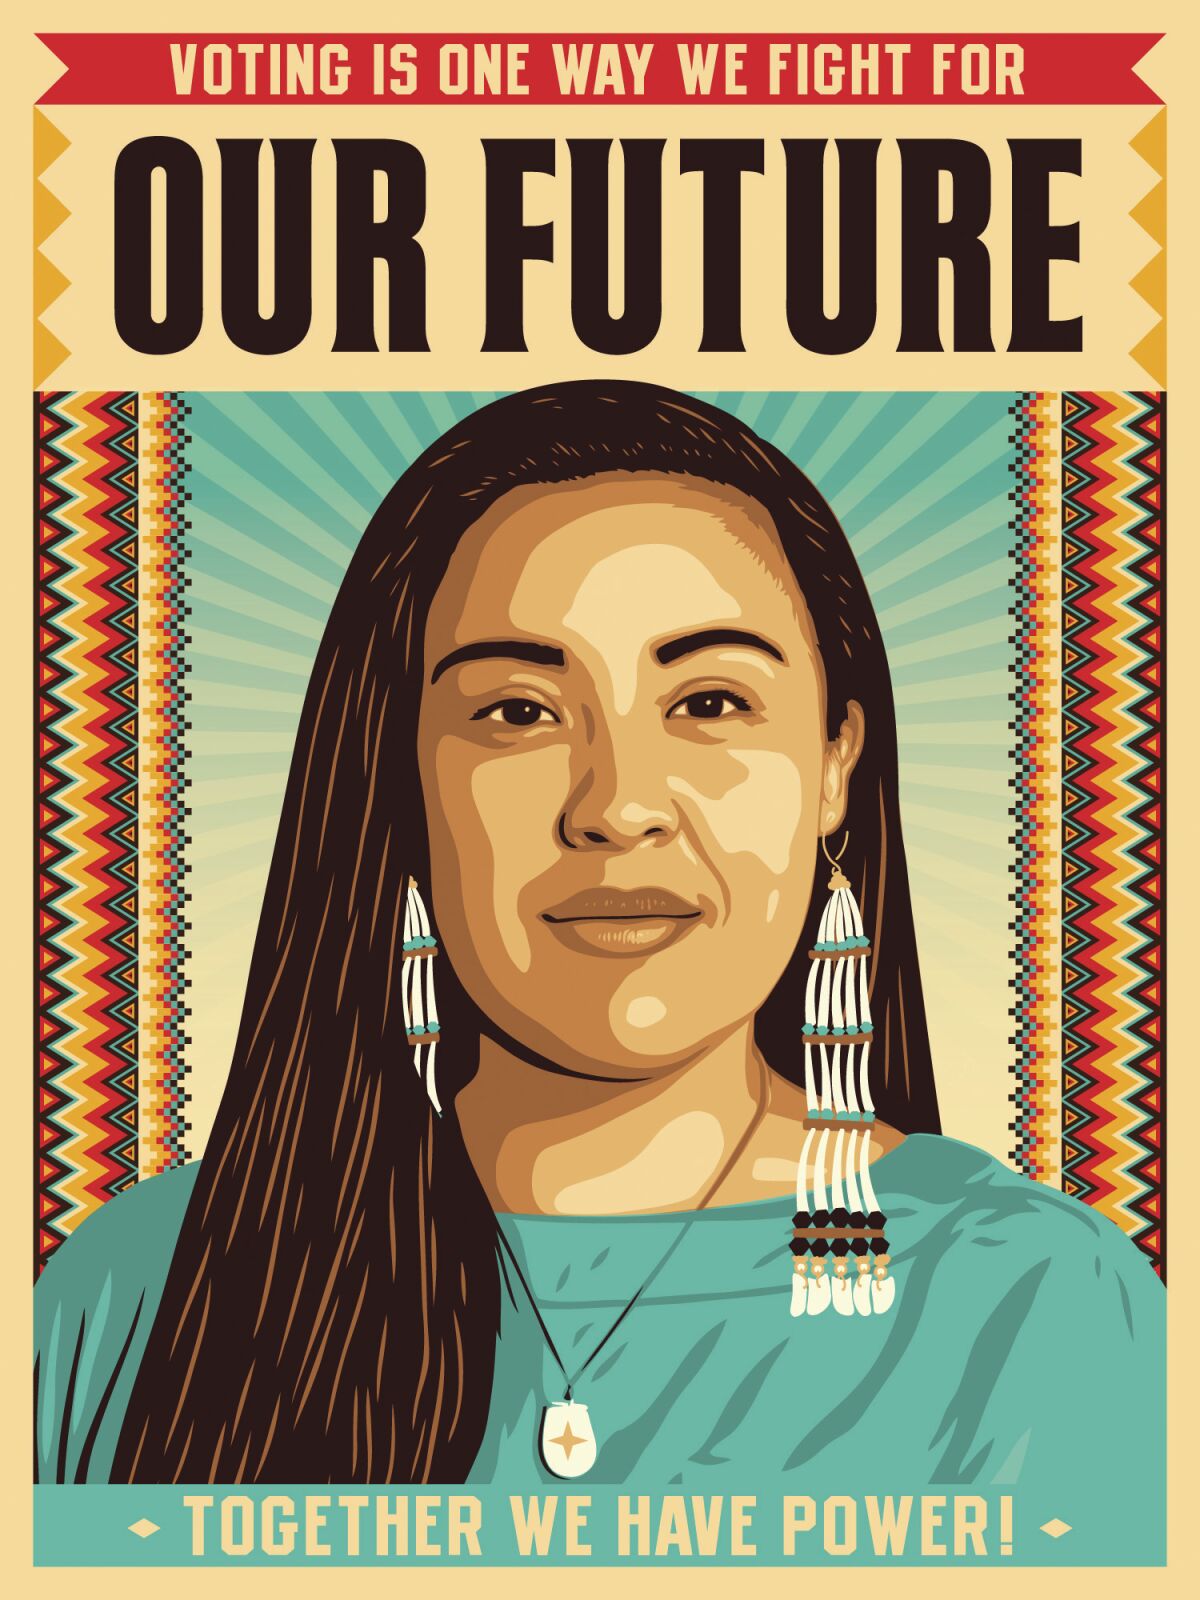 Shalene Joseph, 28, seen in "Our Future" artwork.